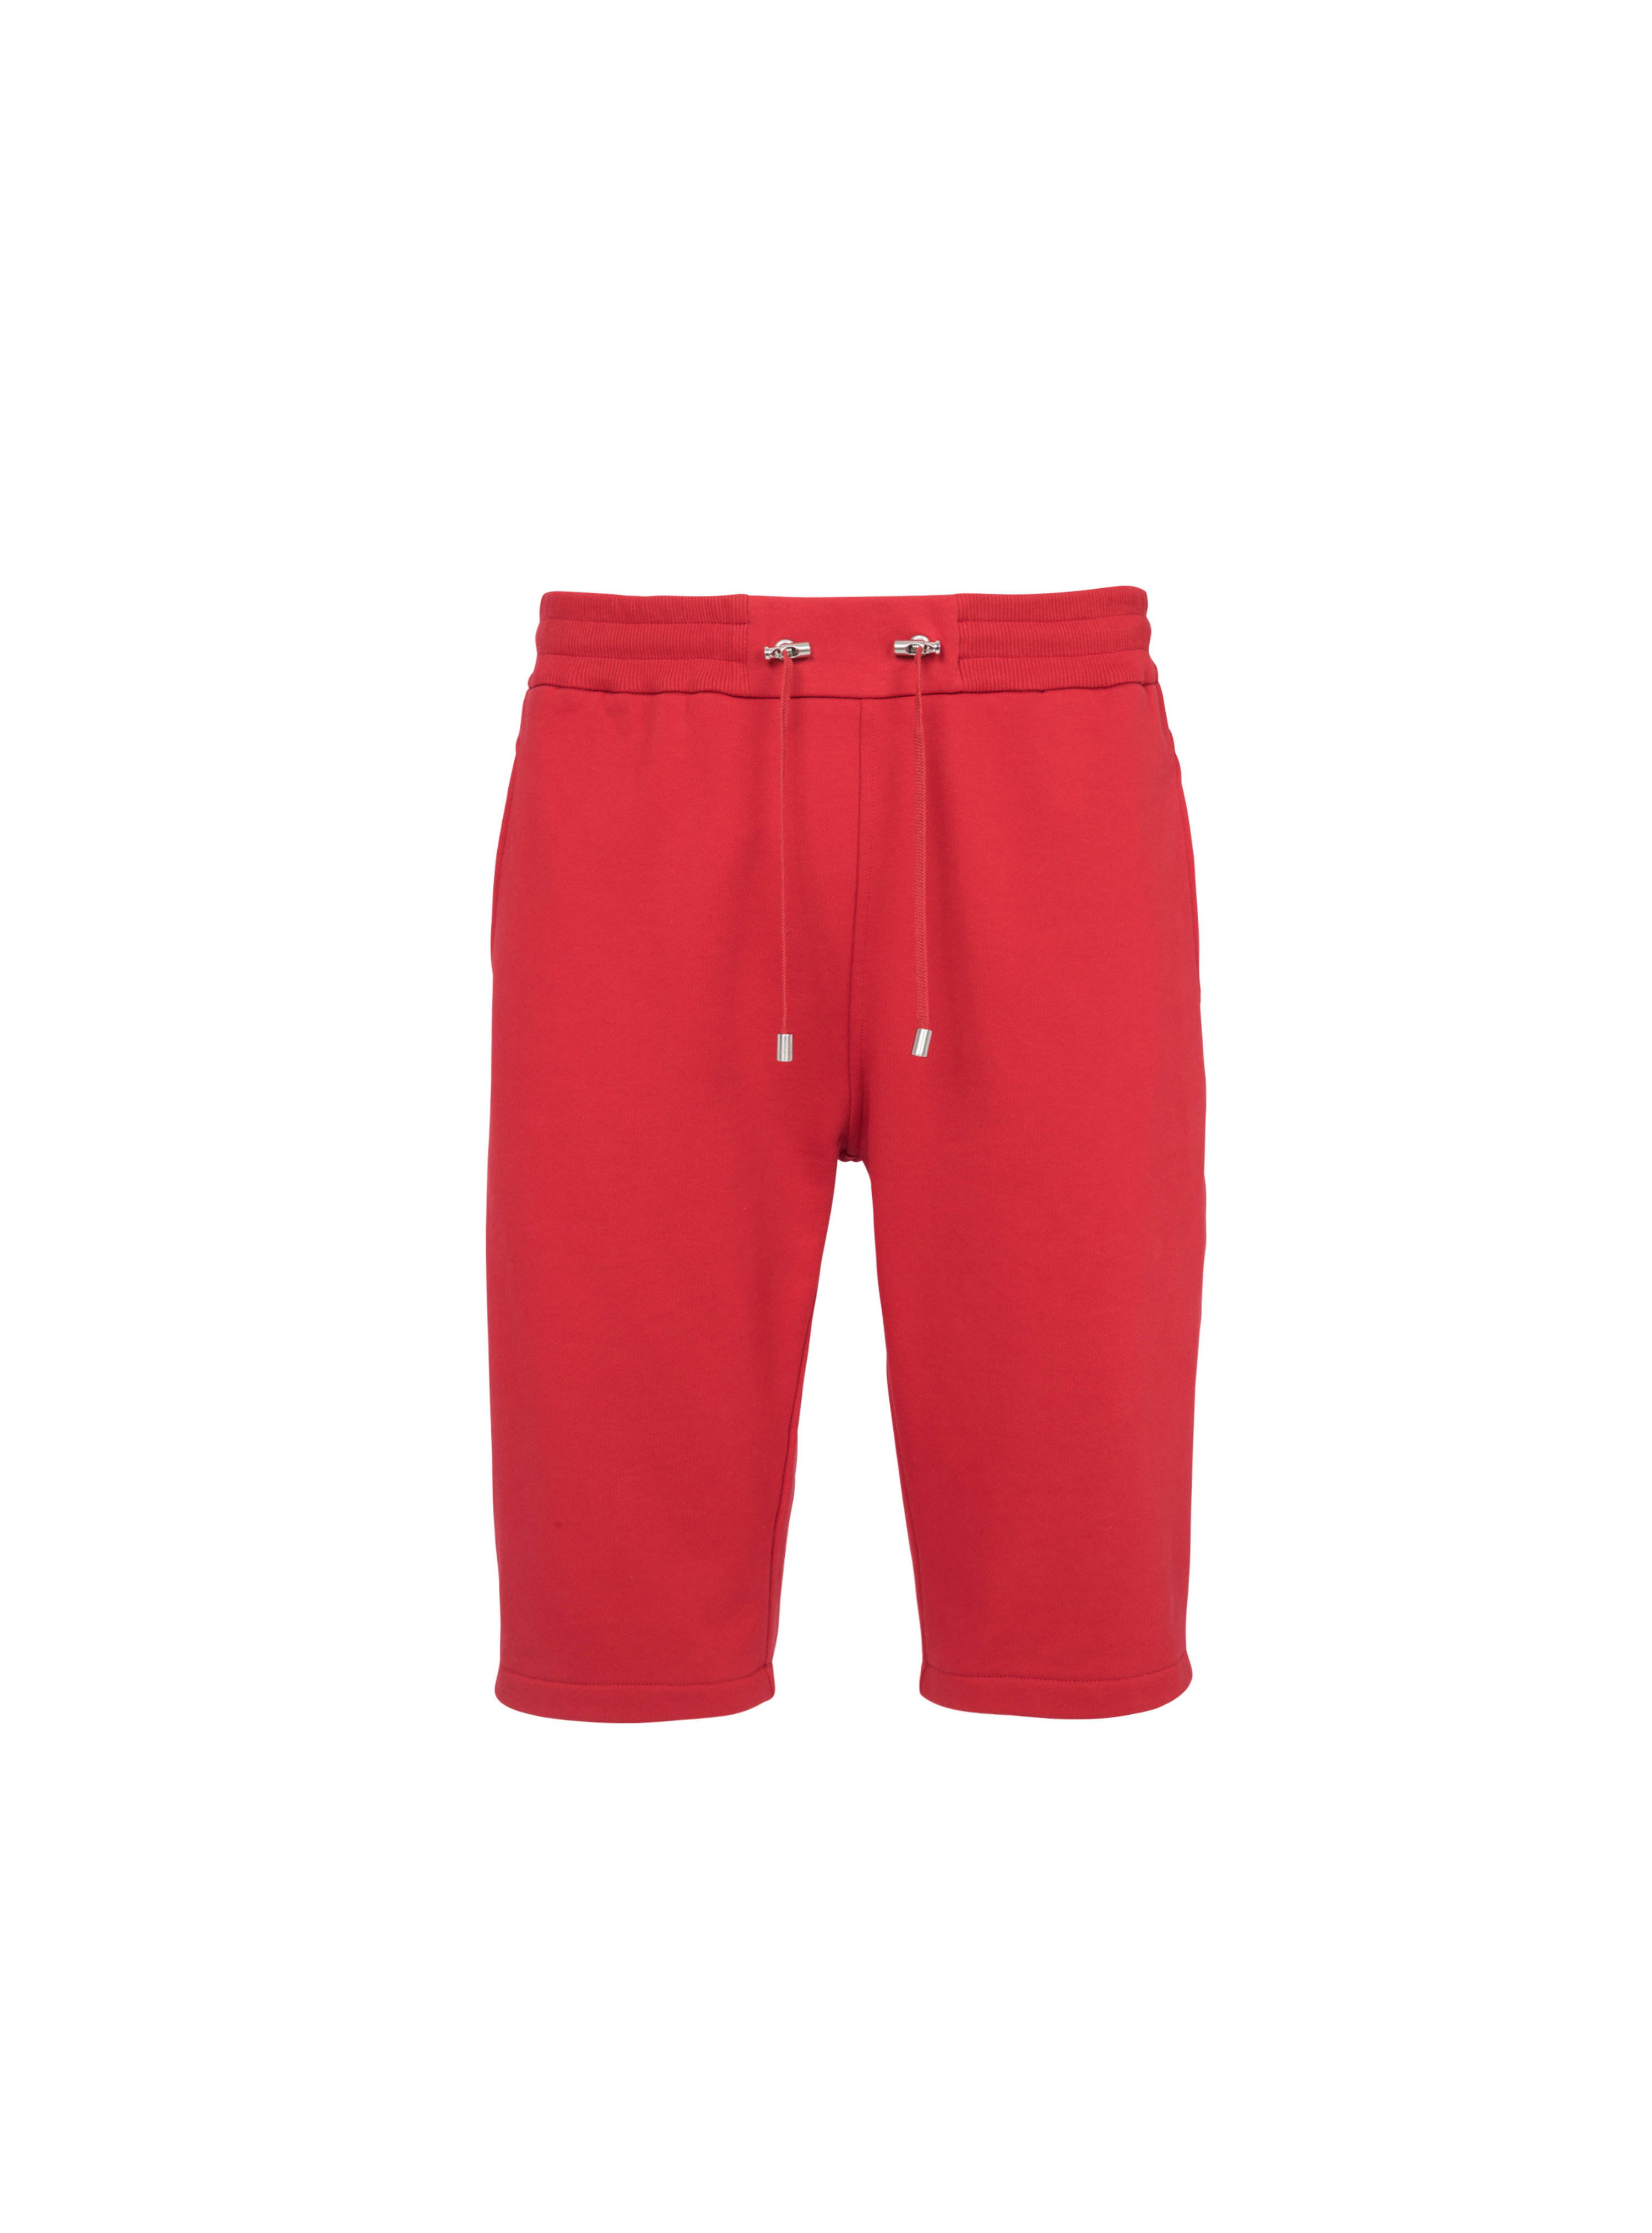 Cotton shorts with flocked Balmain Paris logo, red